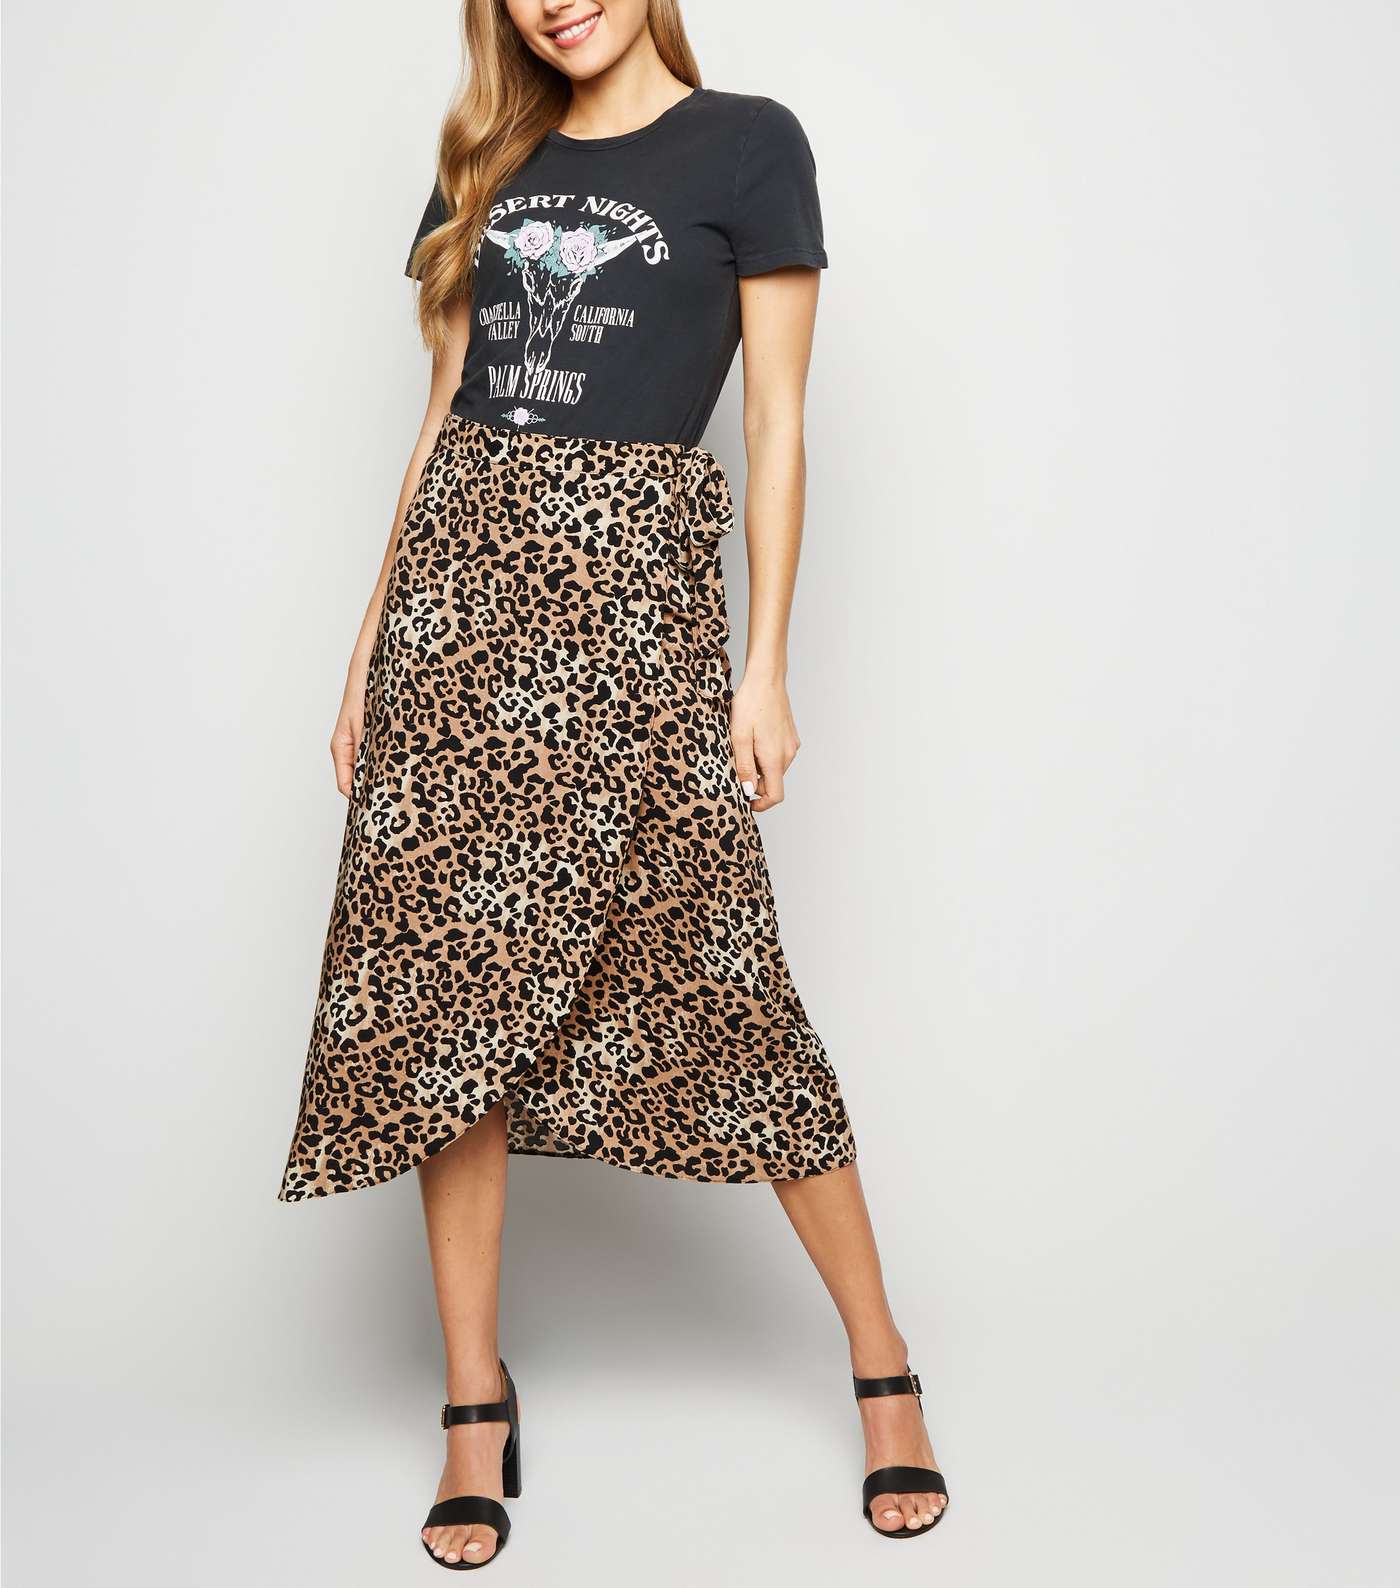 Brown Leopard Print Wrap Midi Skirt 